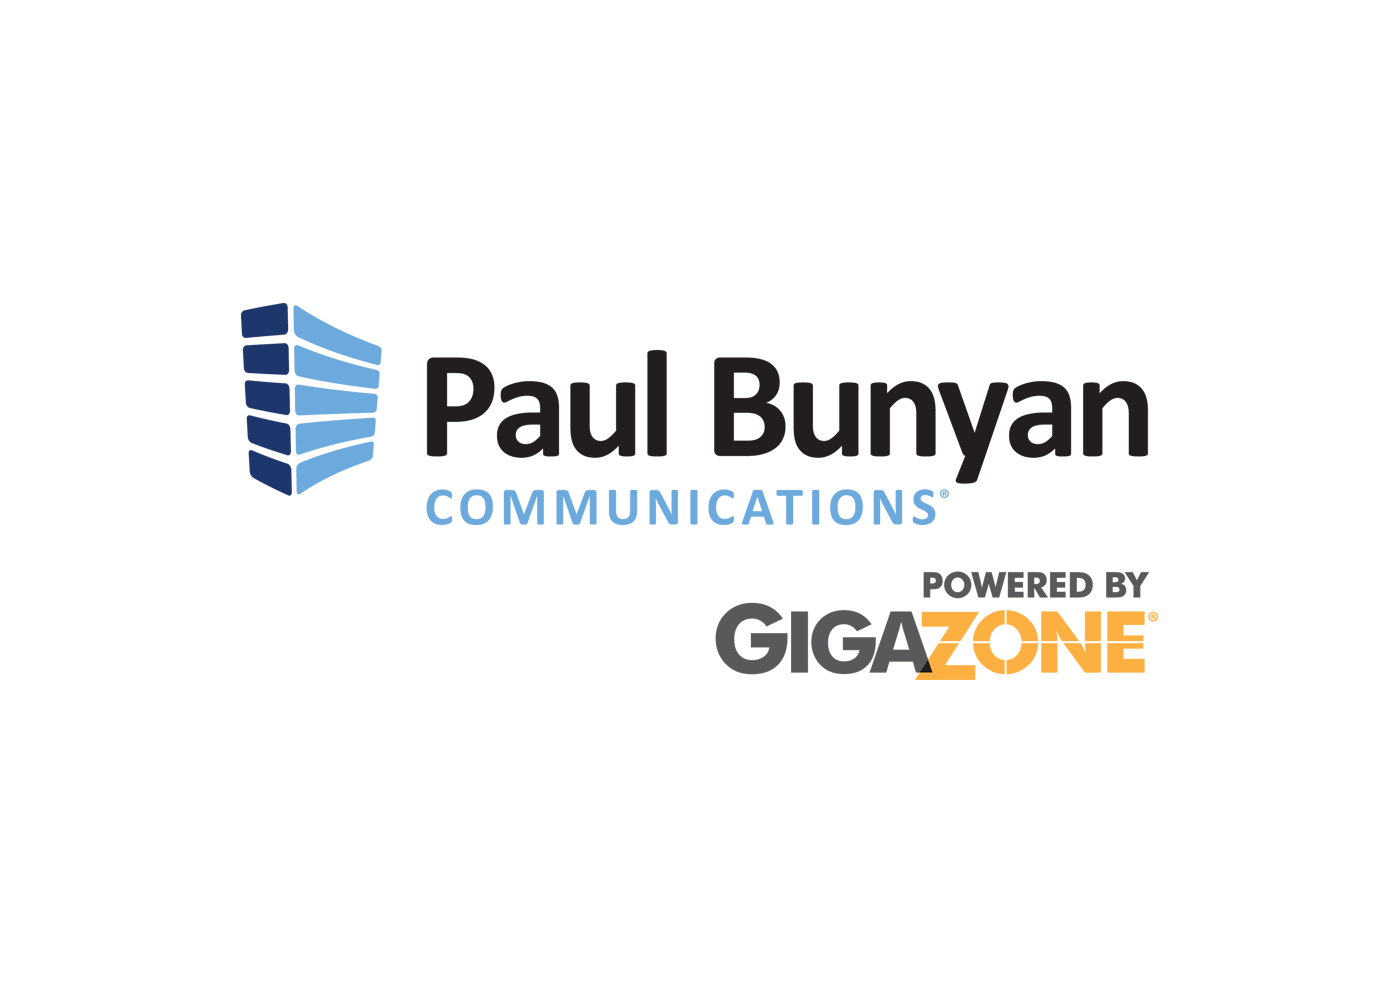 Paul Bunyan Communications logo.